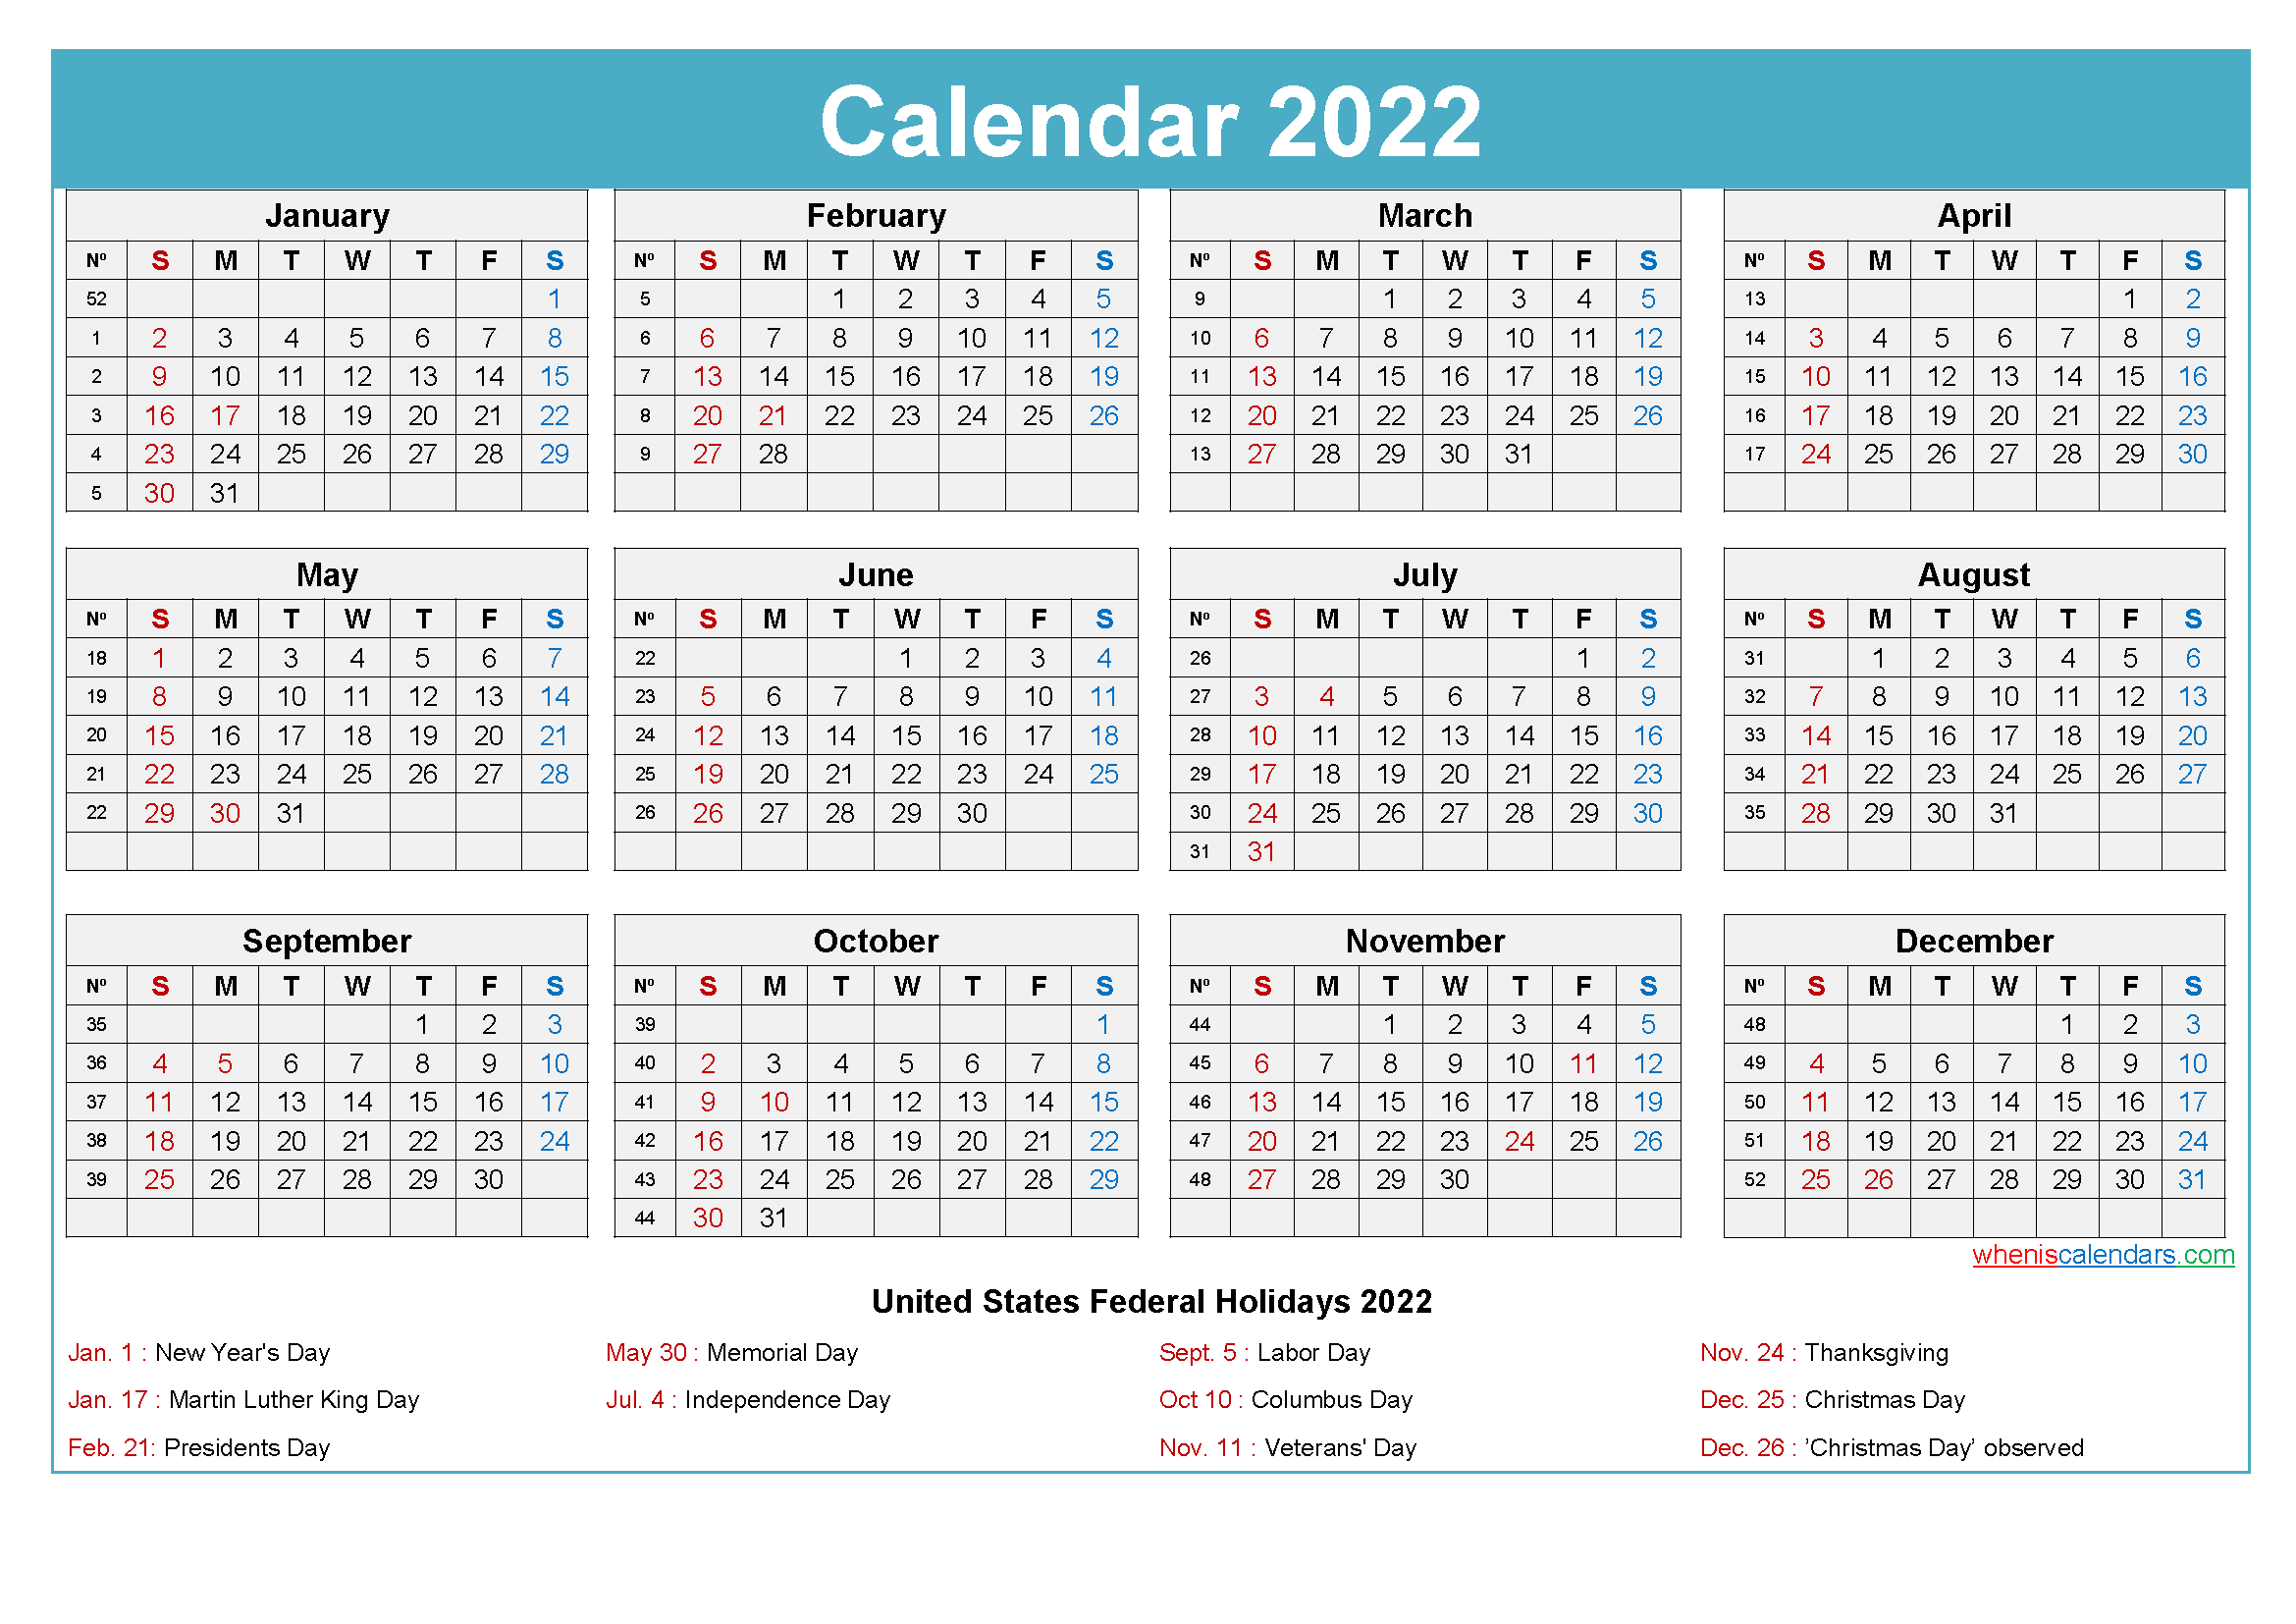 Maxine Desk Calendar 2022 With Holidays Printable  2022 Printable Calendar One Page With Holidays Us